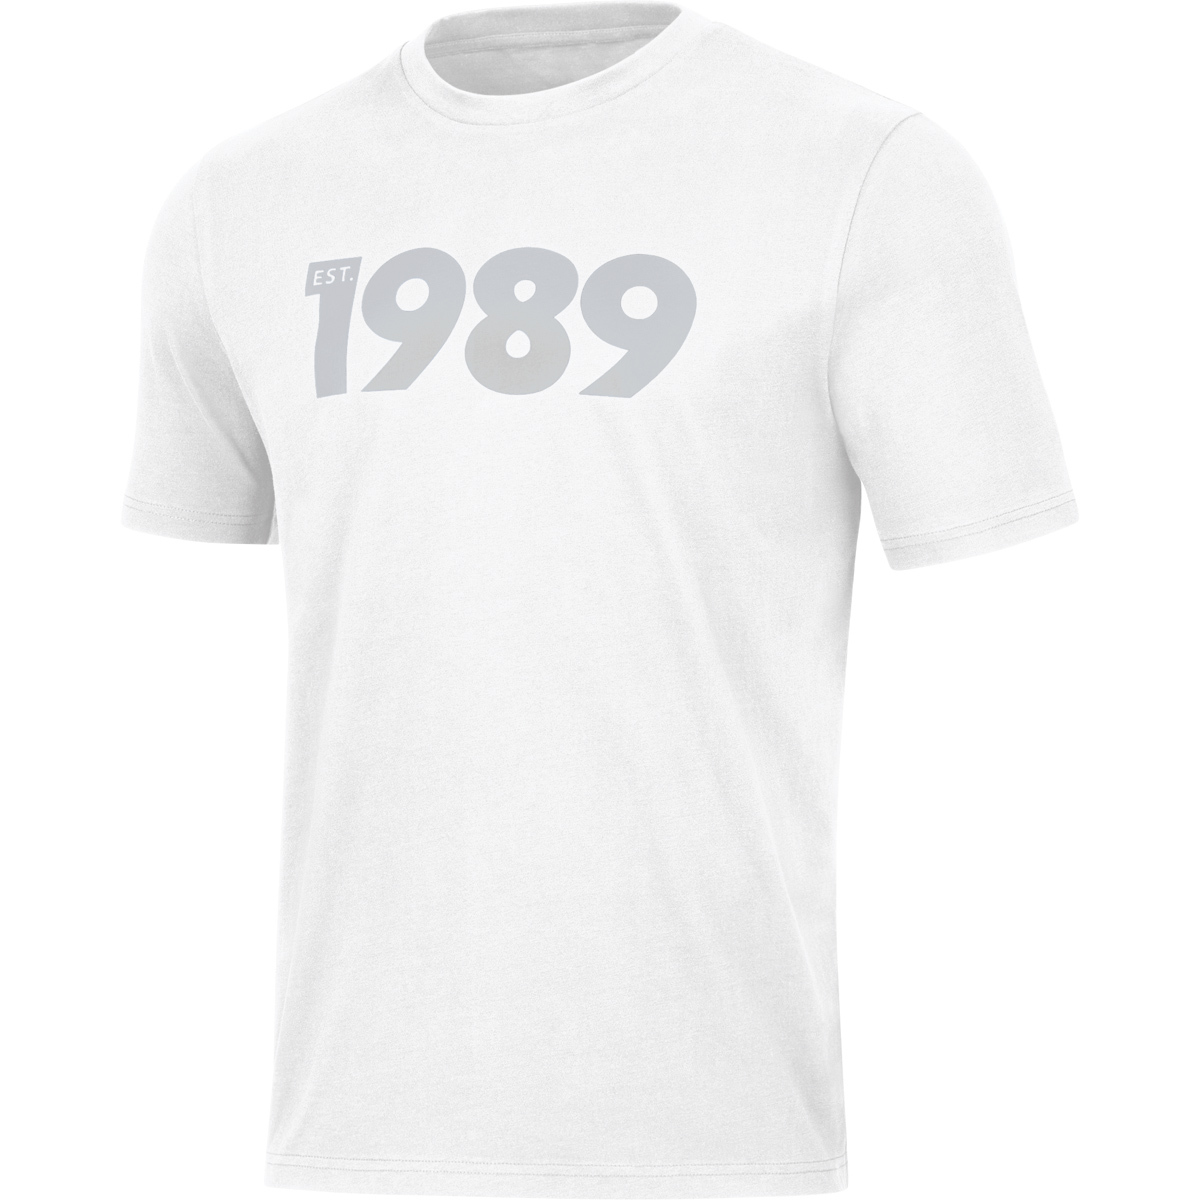 Футболка 1989. Футболки реплики. Copy me футболка. Zeeman одежда футболка. Реплика футболки